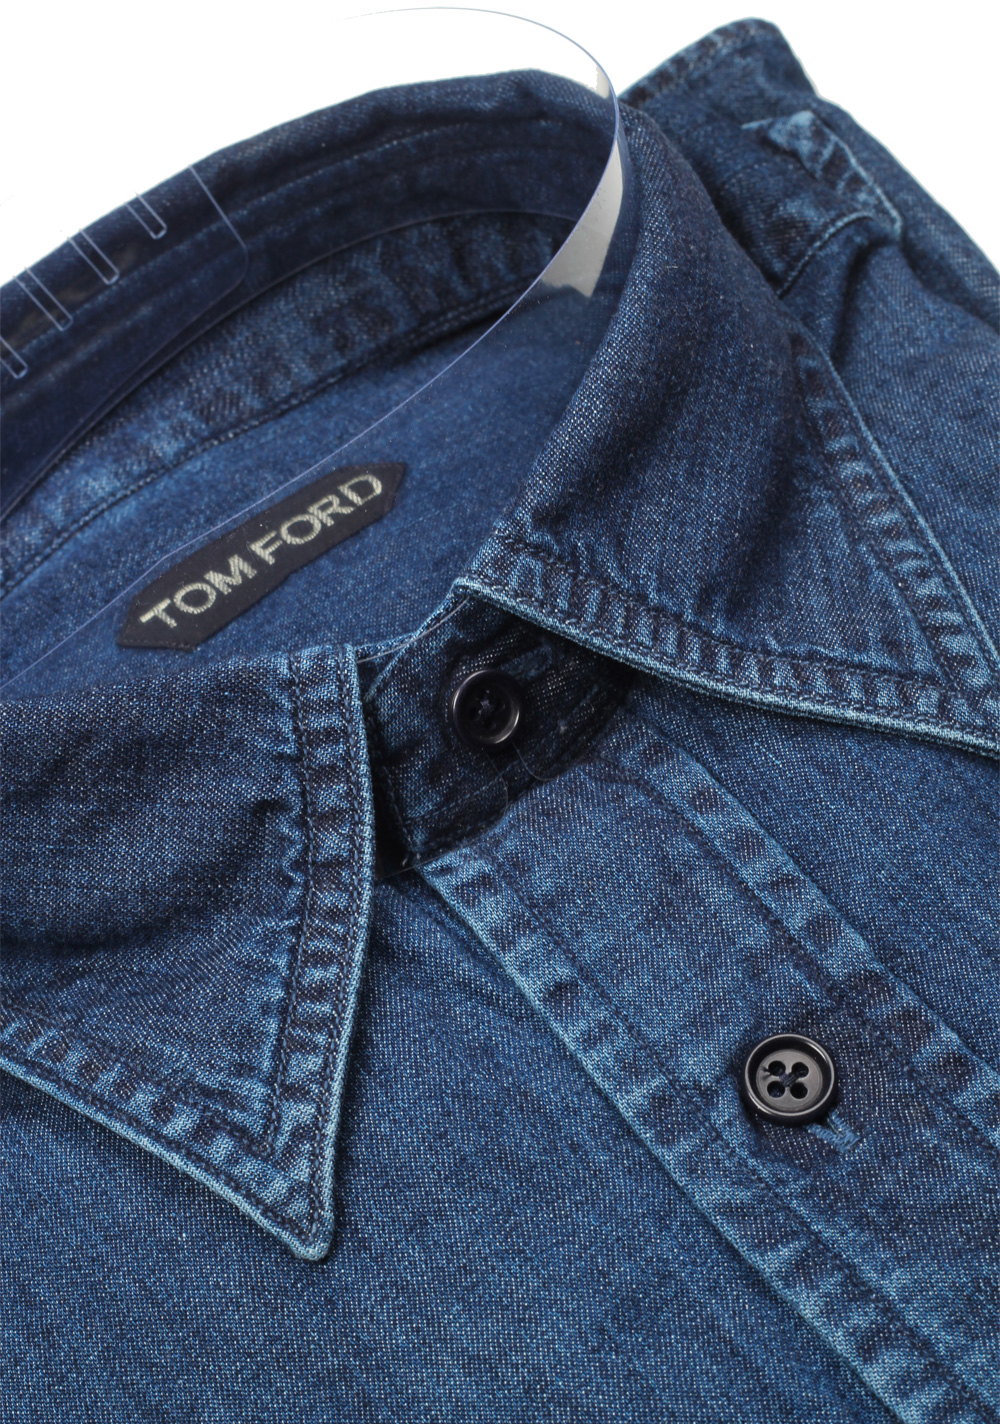 TOM FORD Solid Blue Denim Casual Shirt Size 40 / 15,75 U.S. | Costume Limité